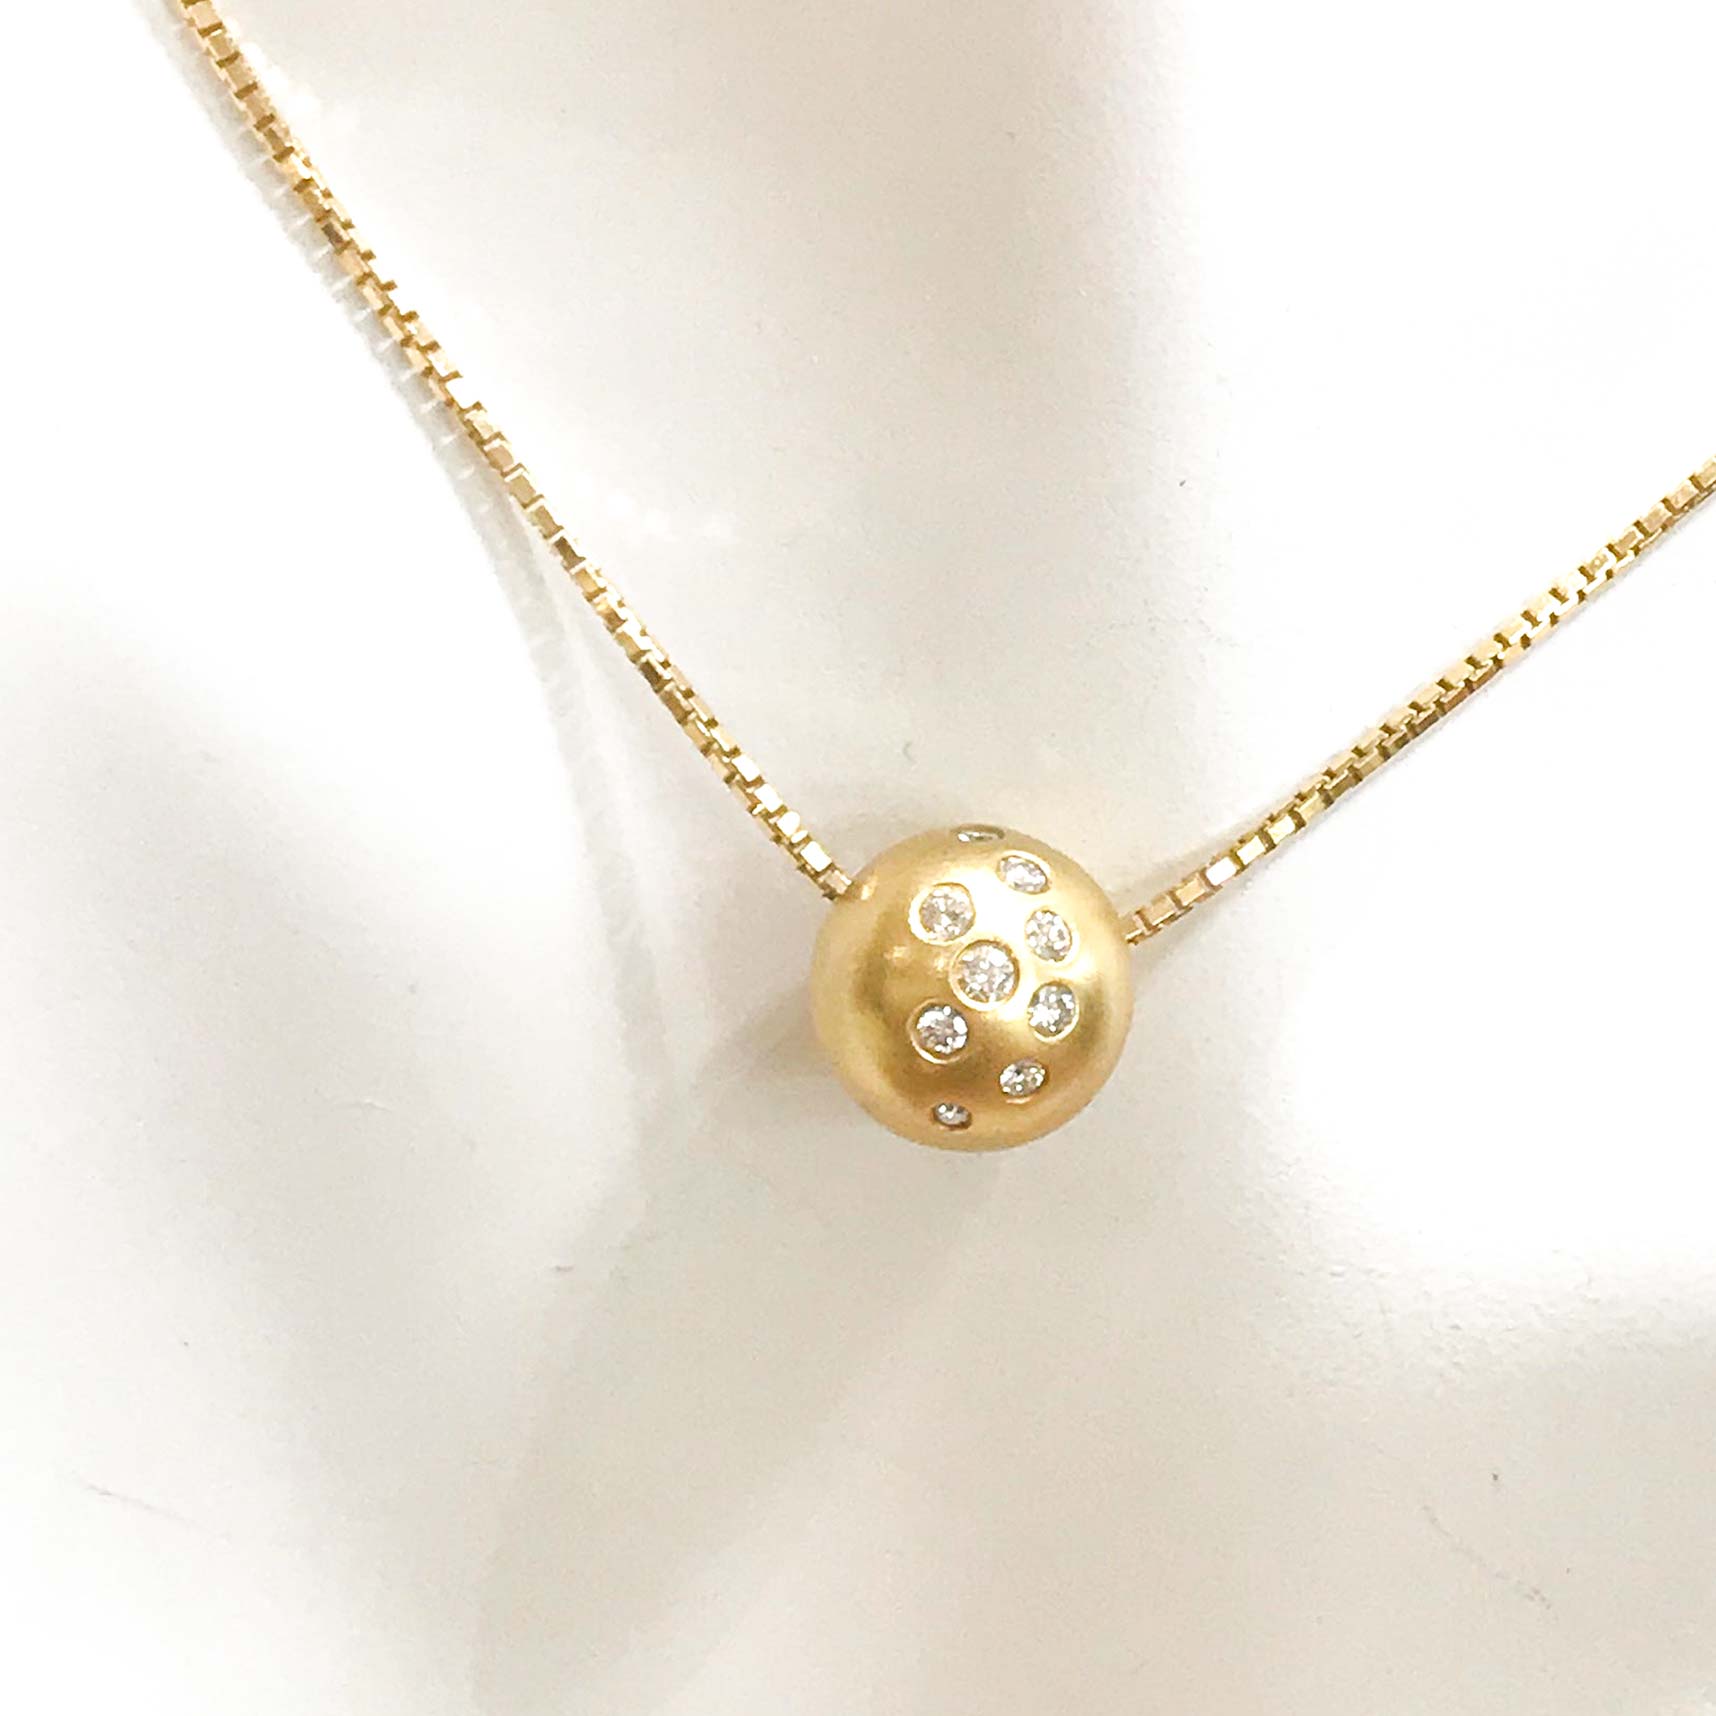 David Yurman $1150 White Diamond Ball Necklace Sterling Silver 18k  Gold,Gift Box | eBay